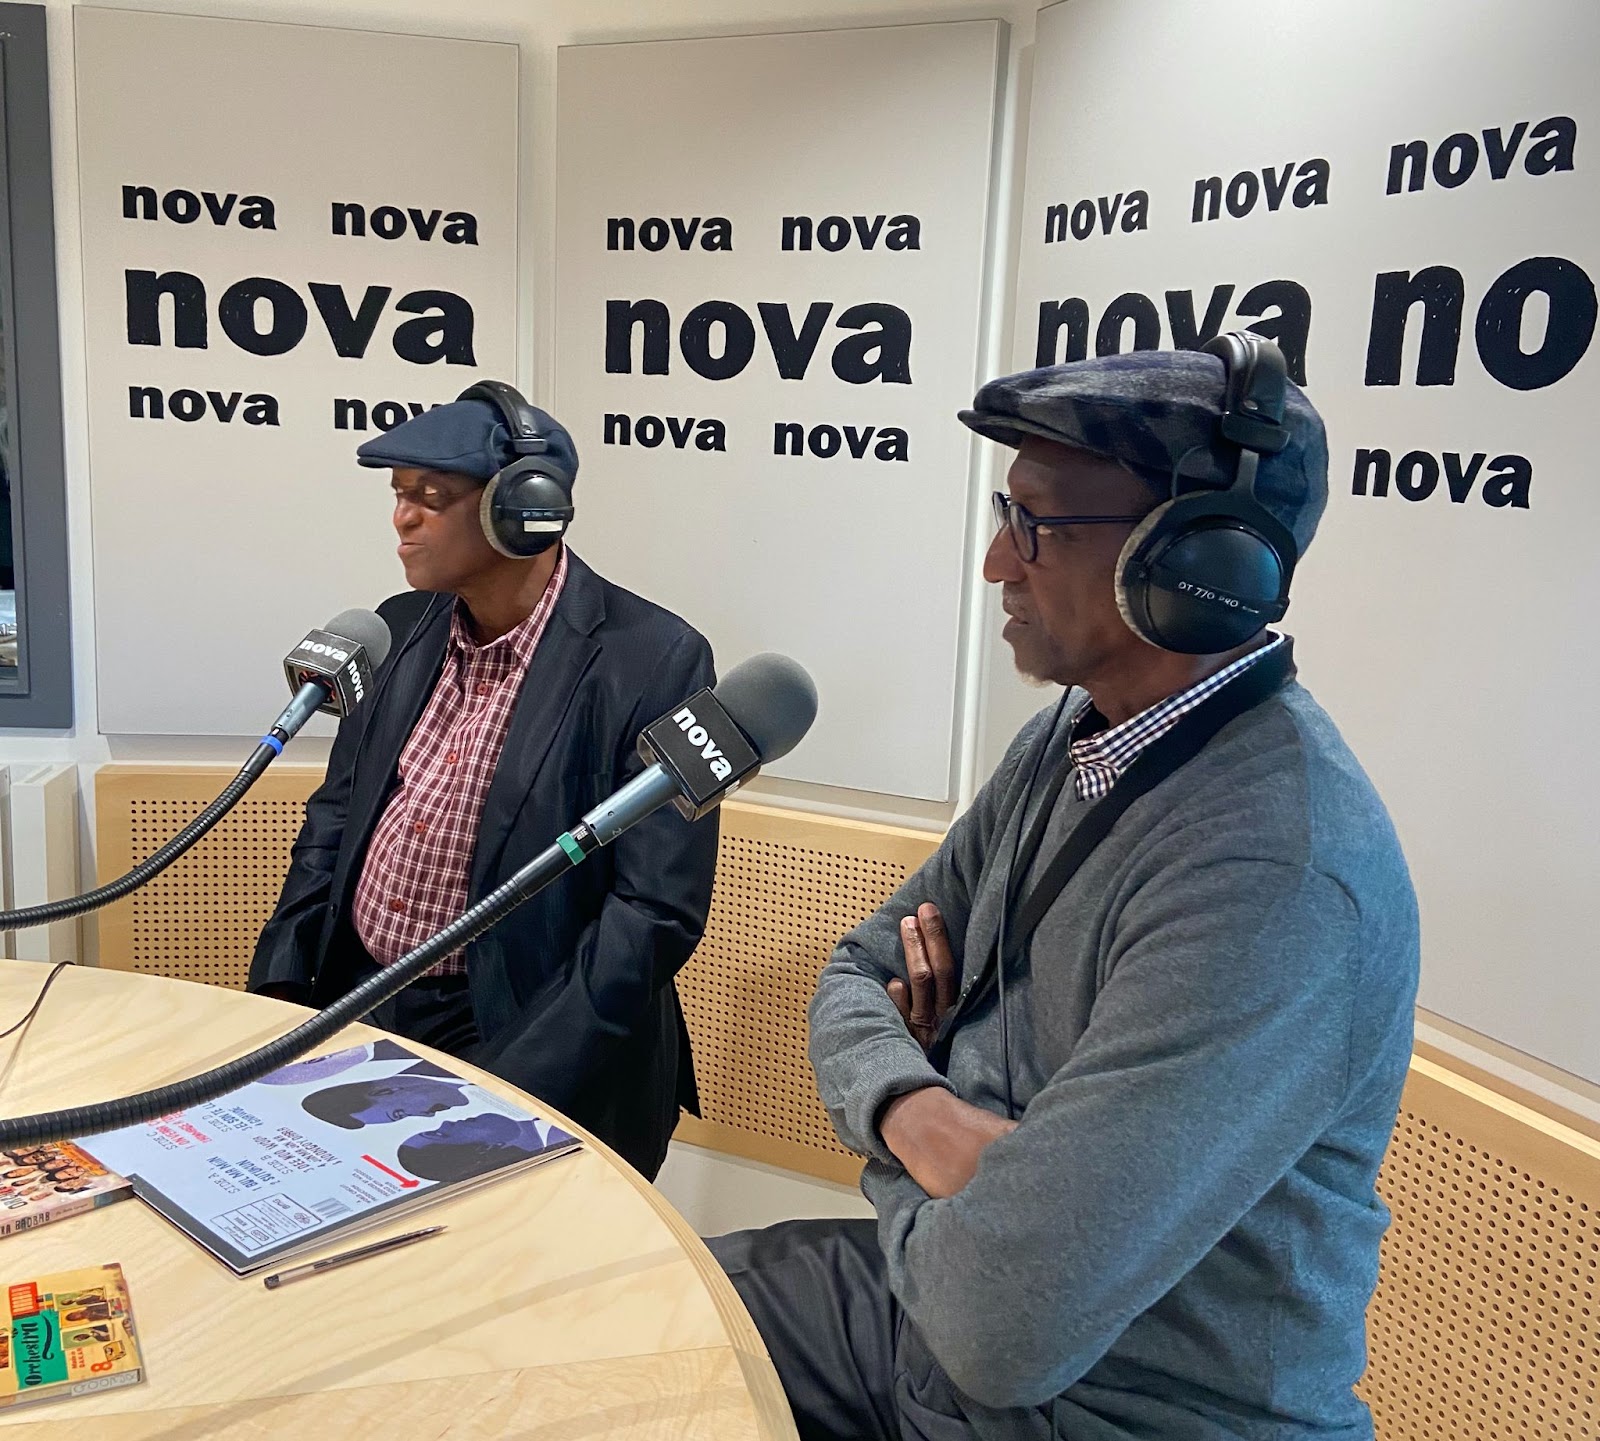 Néo Géo Nova - Radio Nova